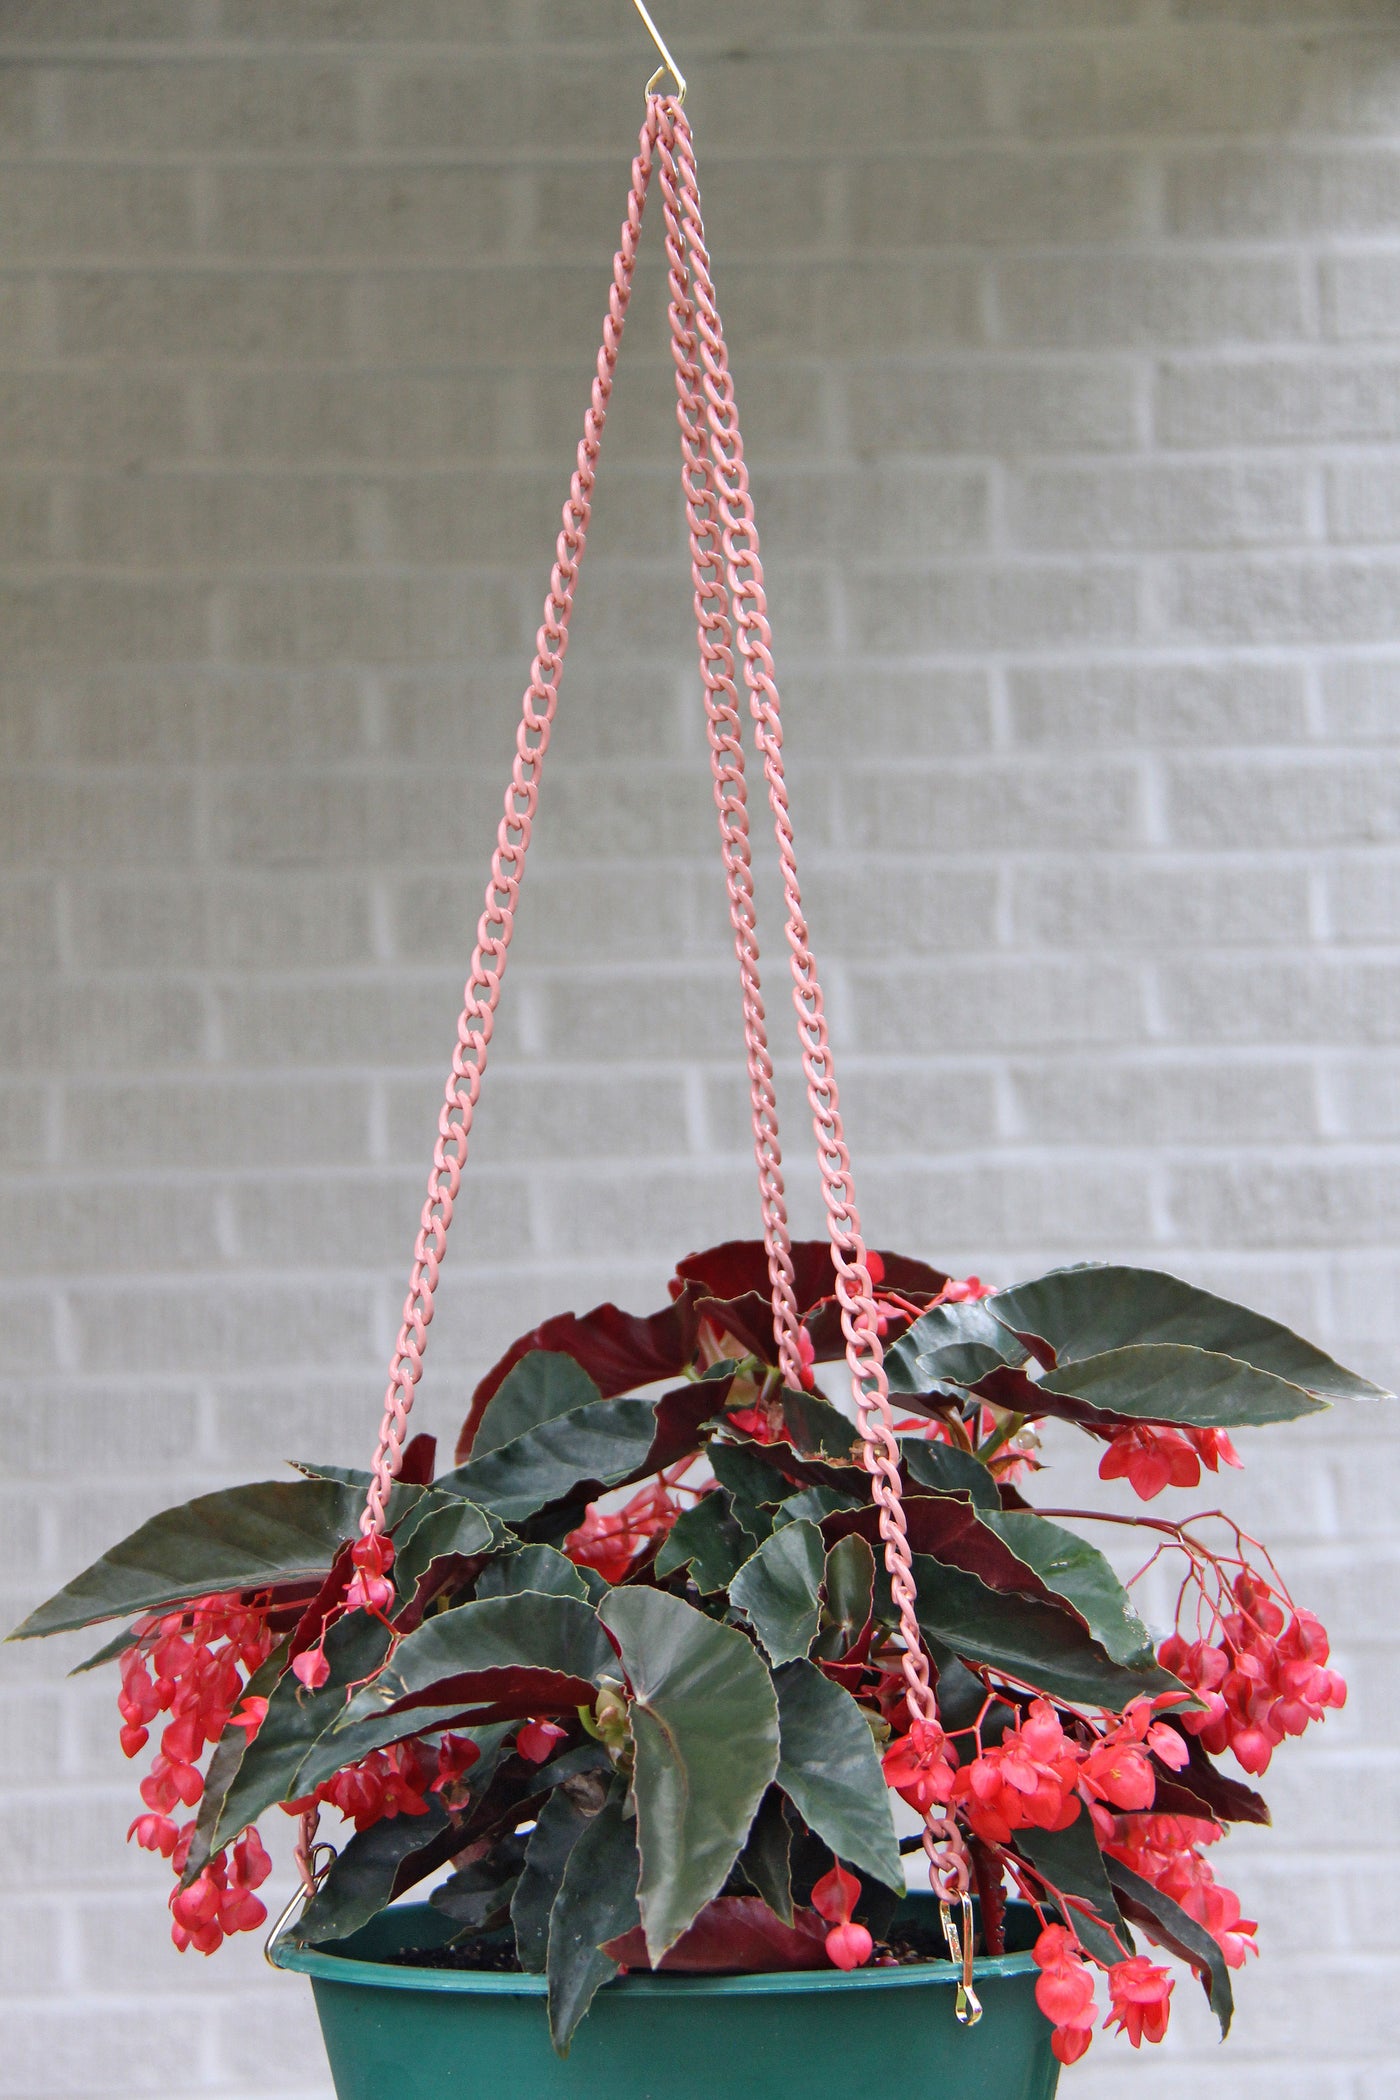 Colorful Enamel Hanging Basket Plant Chain